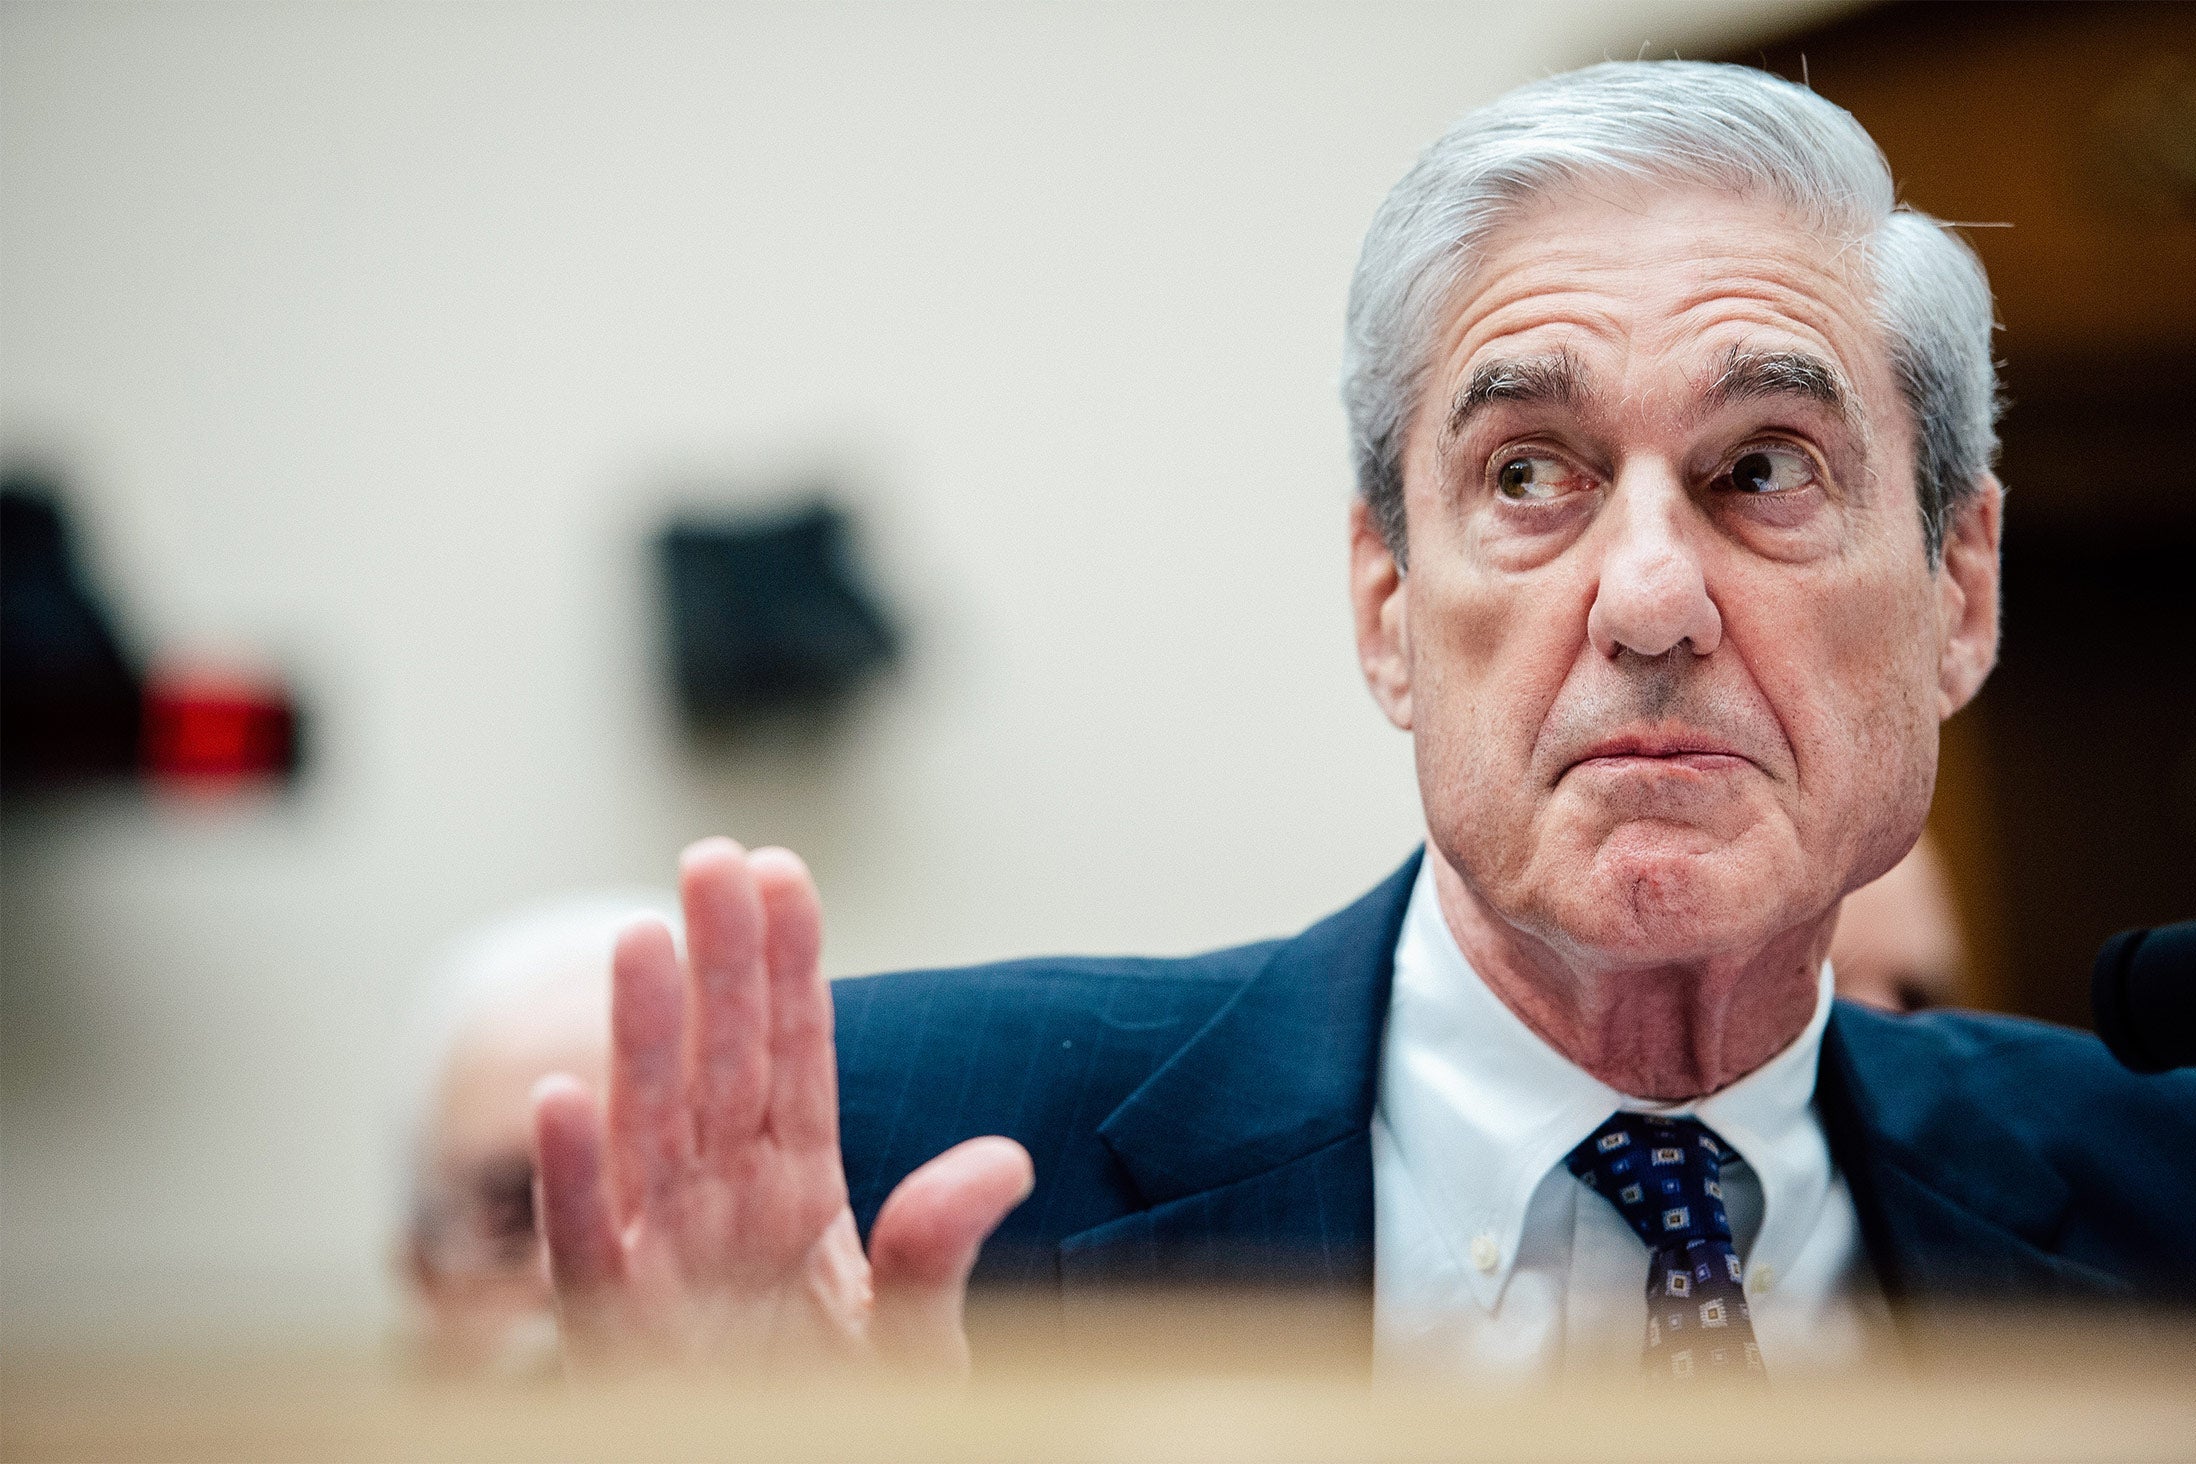 Mueller raising his hand as if in rebuttal.